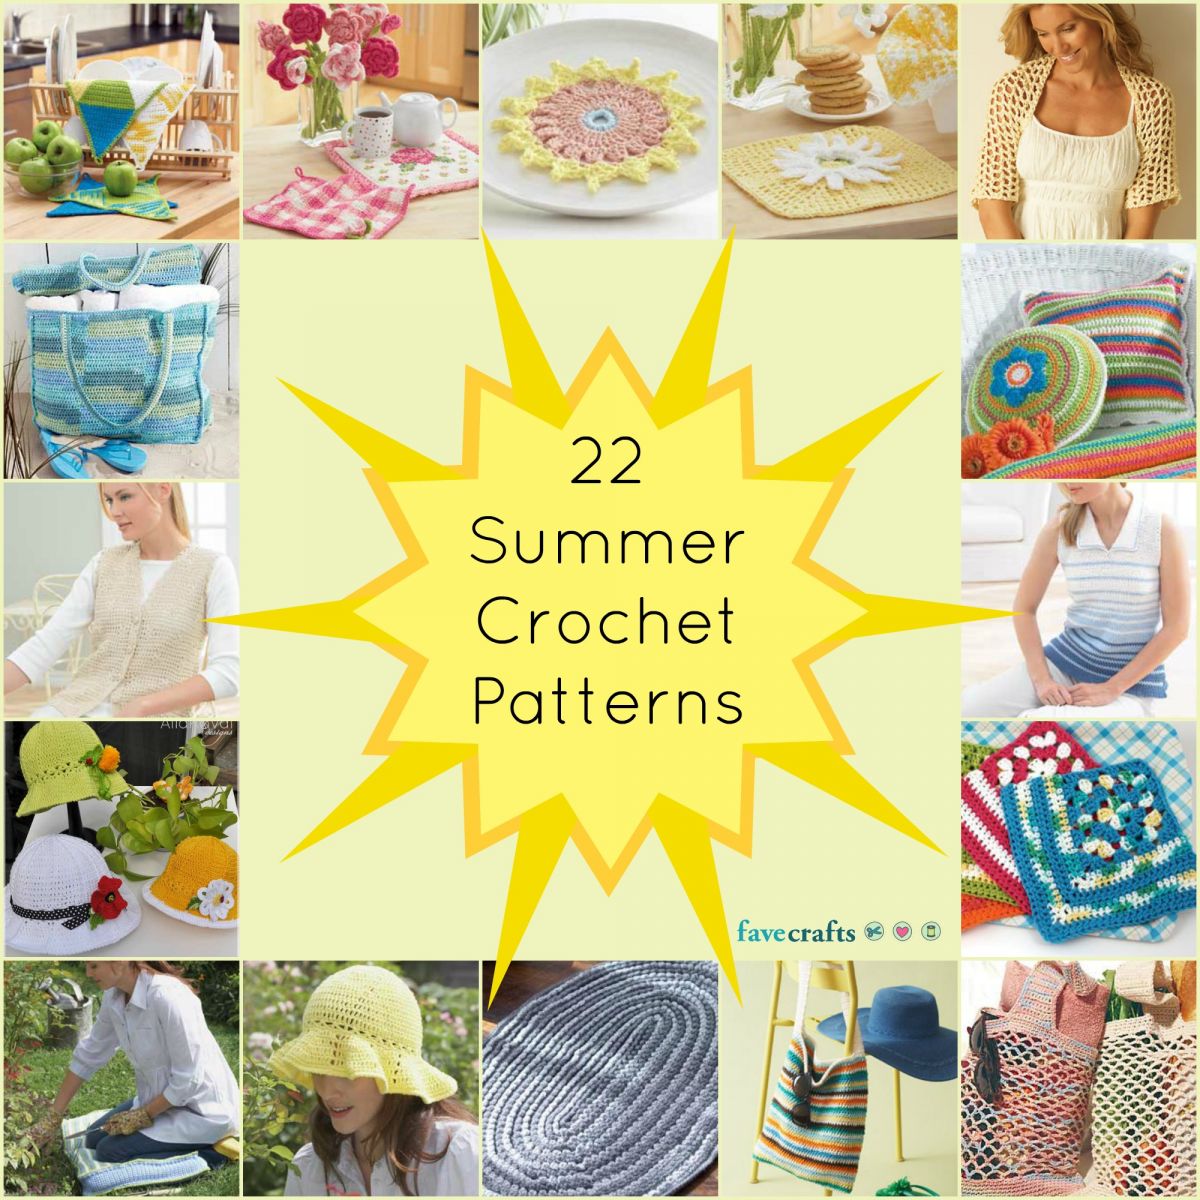 22 Summer Crochet Patterns